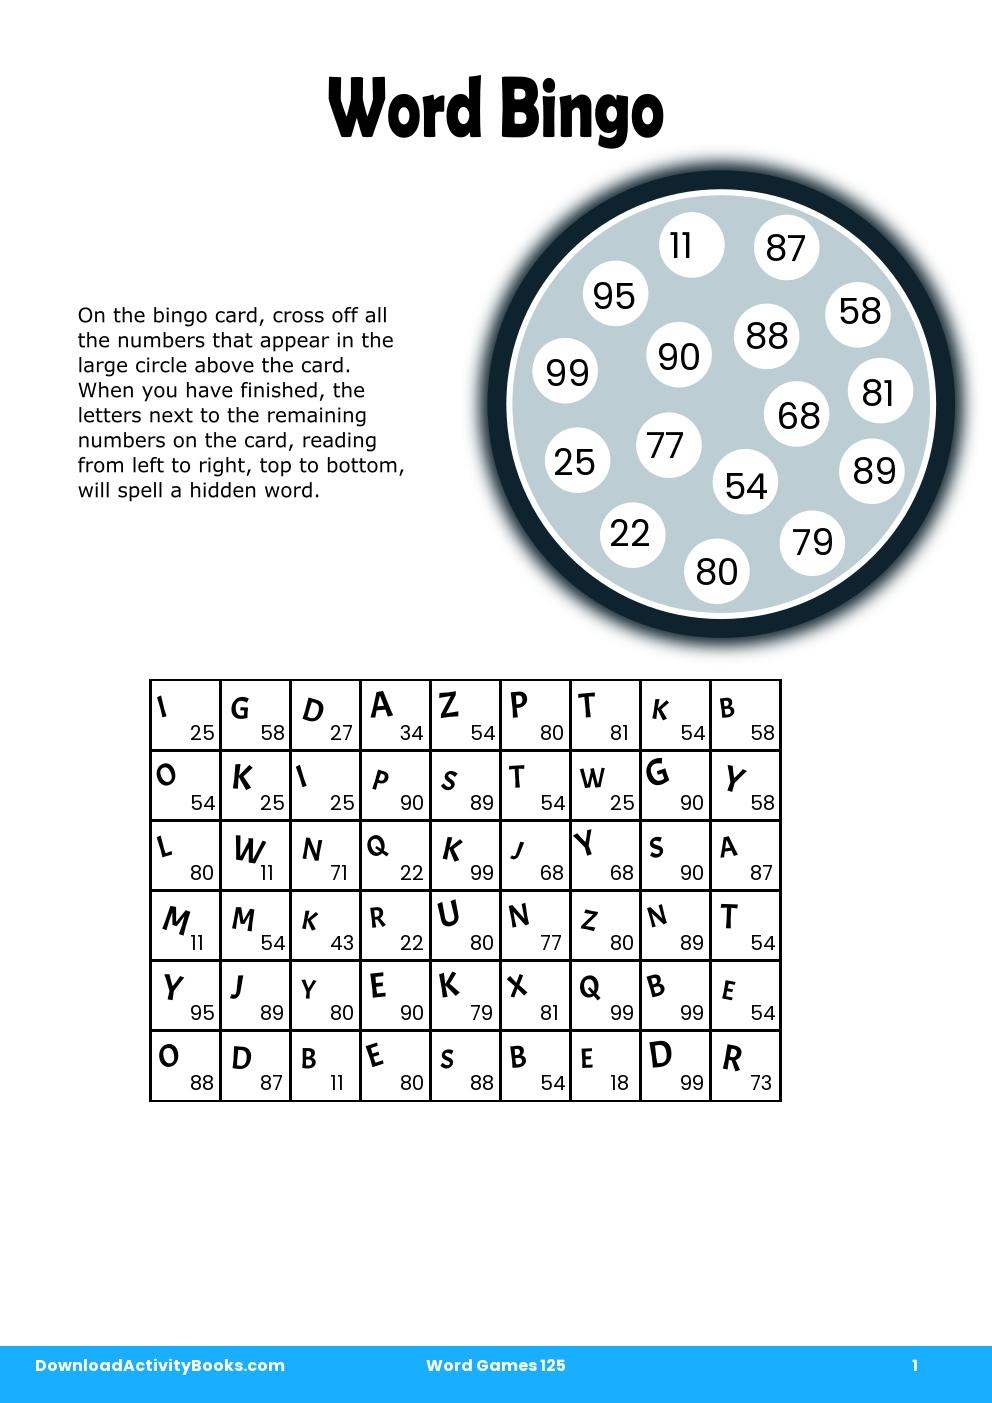 Word Bingo in Word Games 125